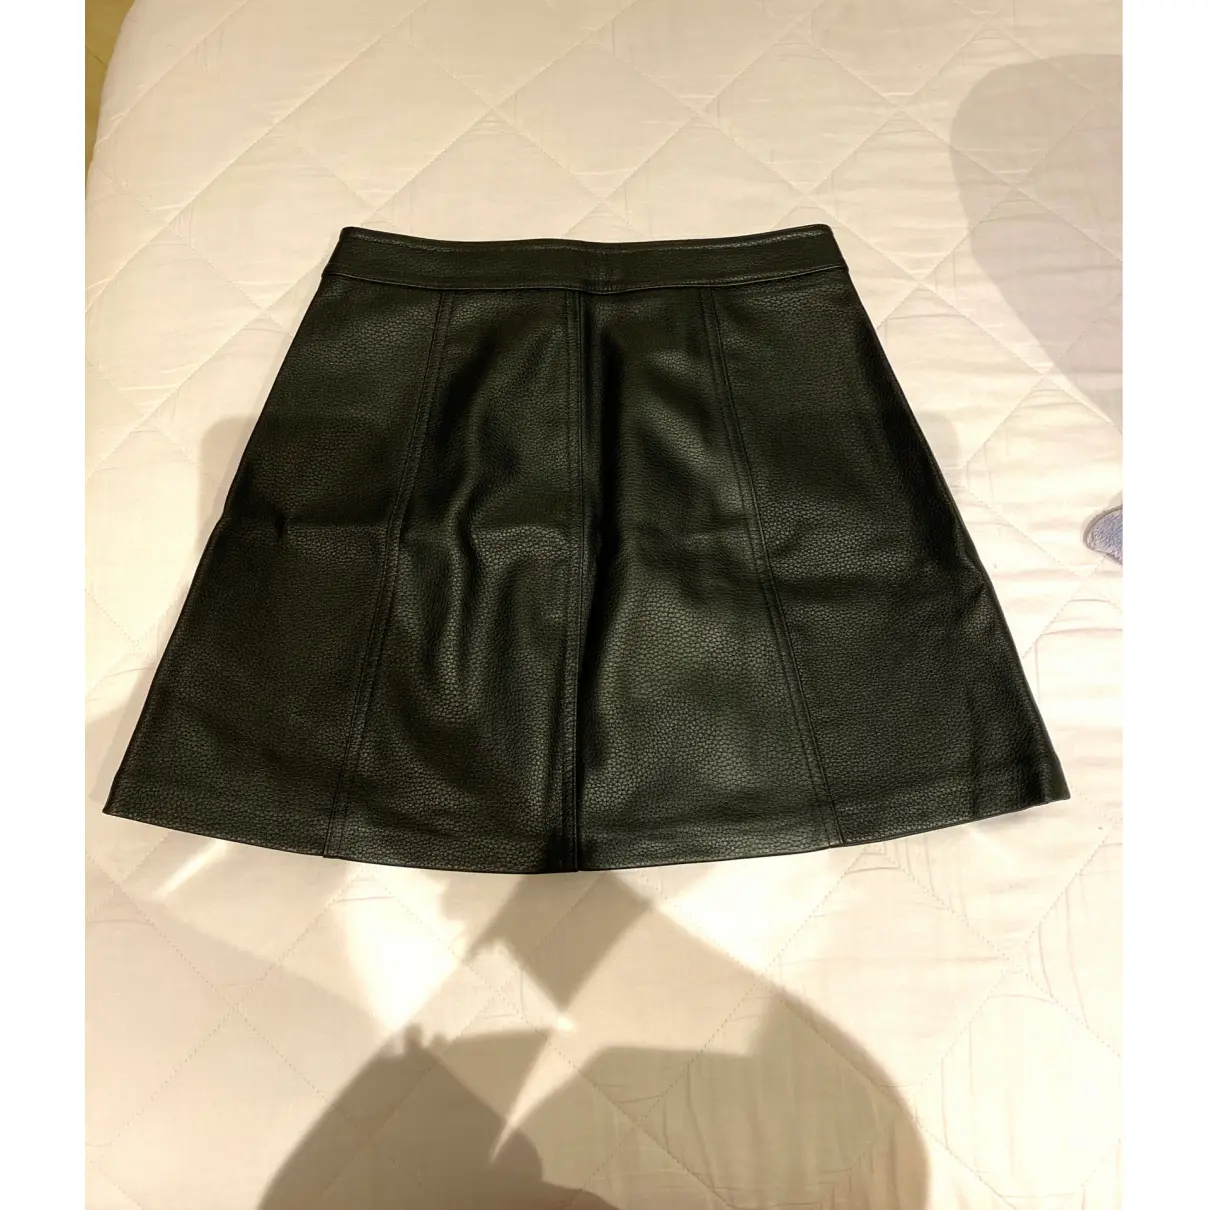 Buy BERSHKA Leather mini skirt online